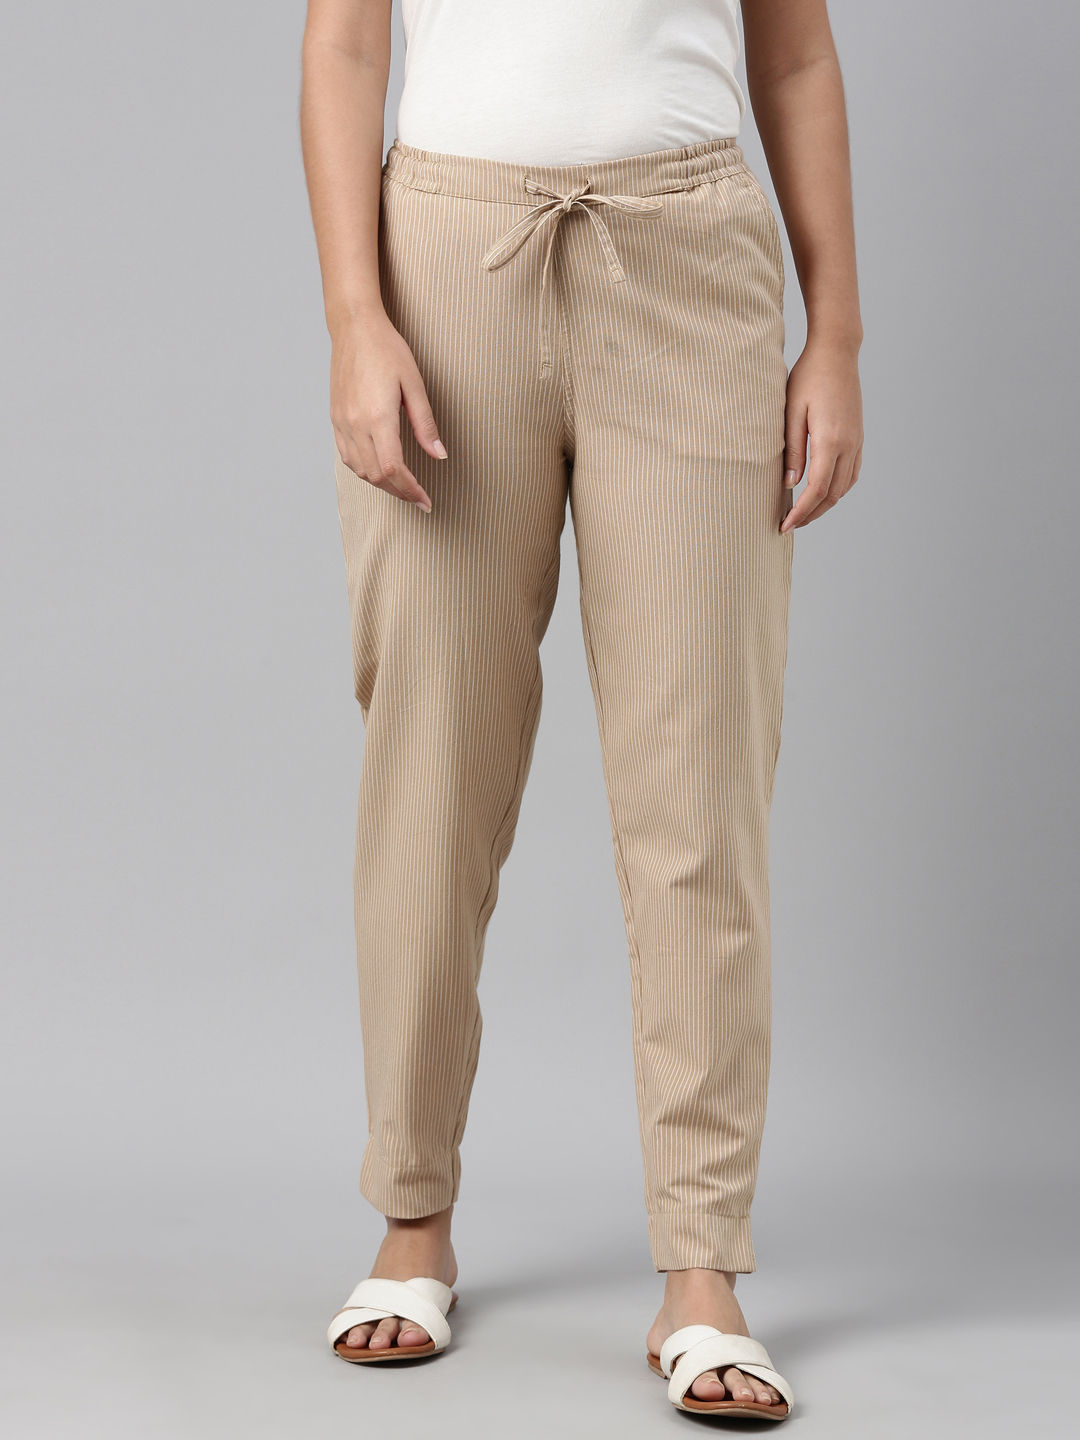 Raw Silk Pants Pants Silk Silk Pants Silk Pants for Women  Etsy Canada   Salwar pattern Pants design Salwar designs